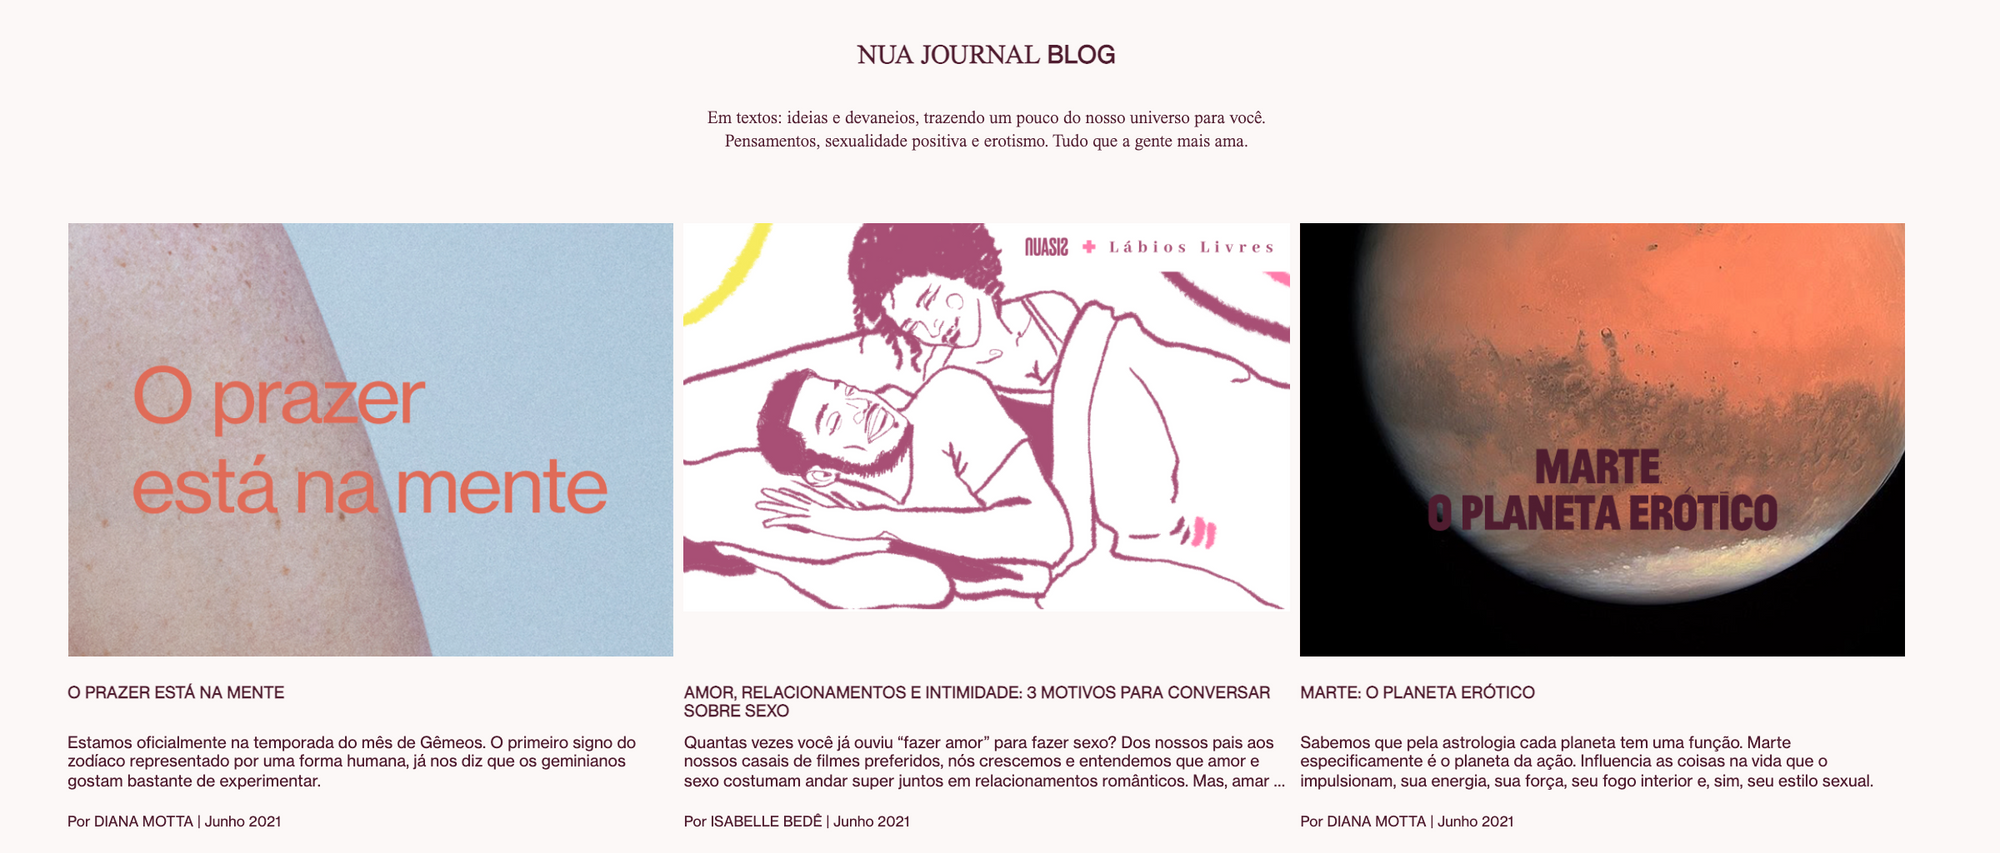 Nua Journal, blog da loja online de sextoys Nuasis